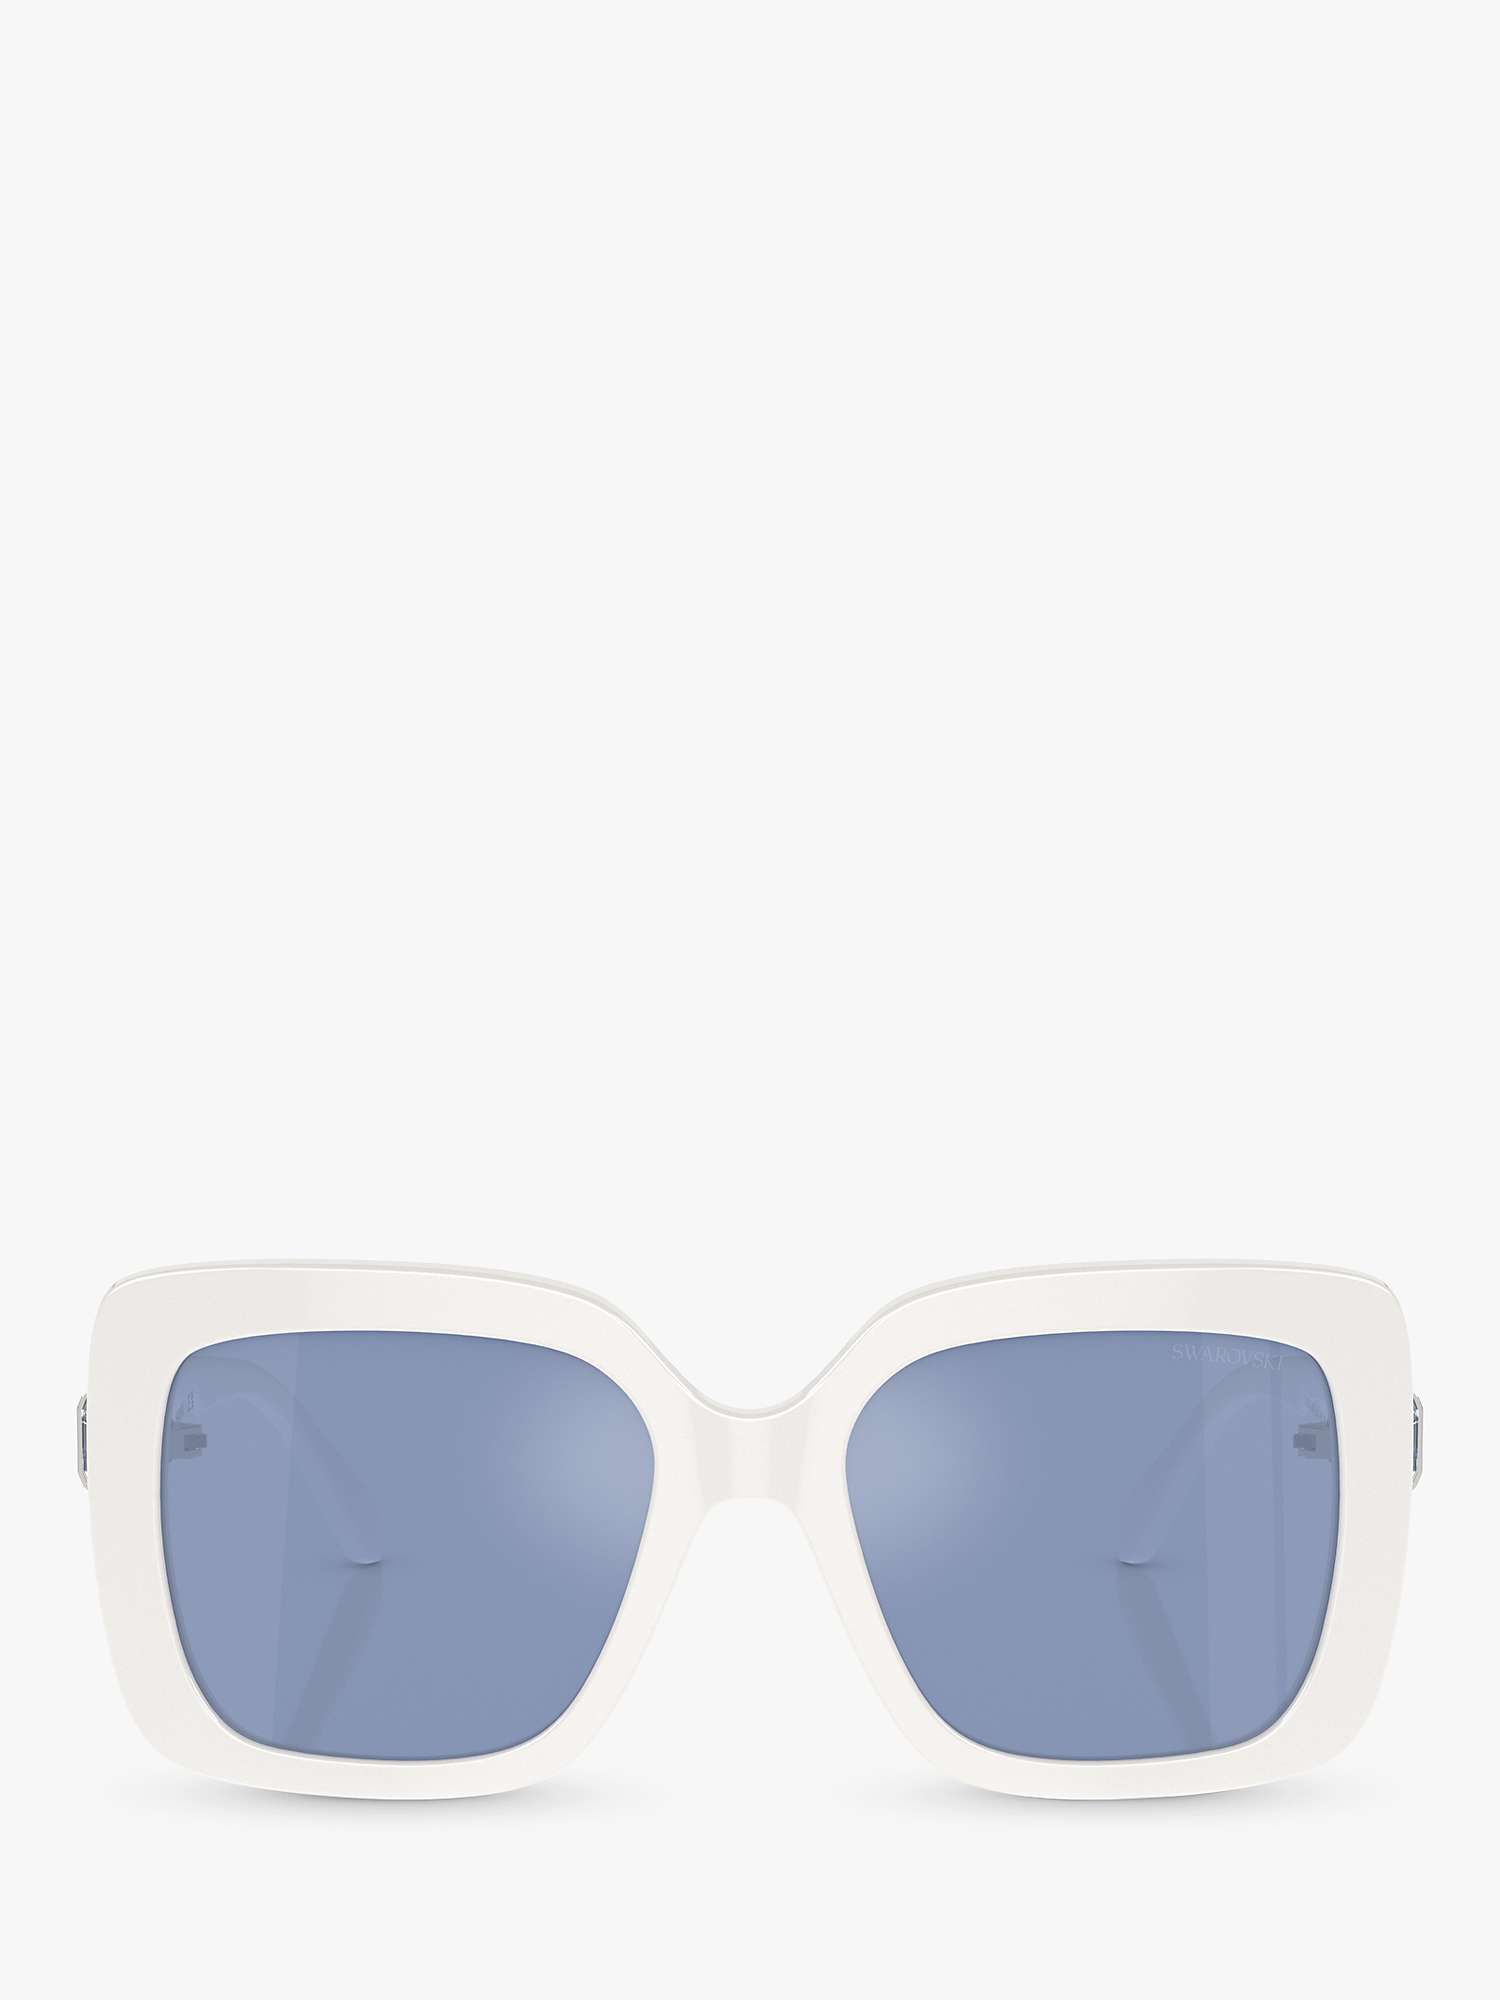 Buy Swarovski SK6001 Women's Square Sunglasses, White/Blue Online at johnlewis.com